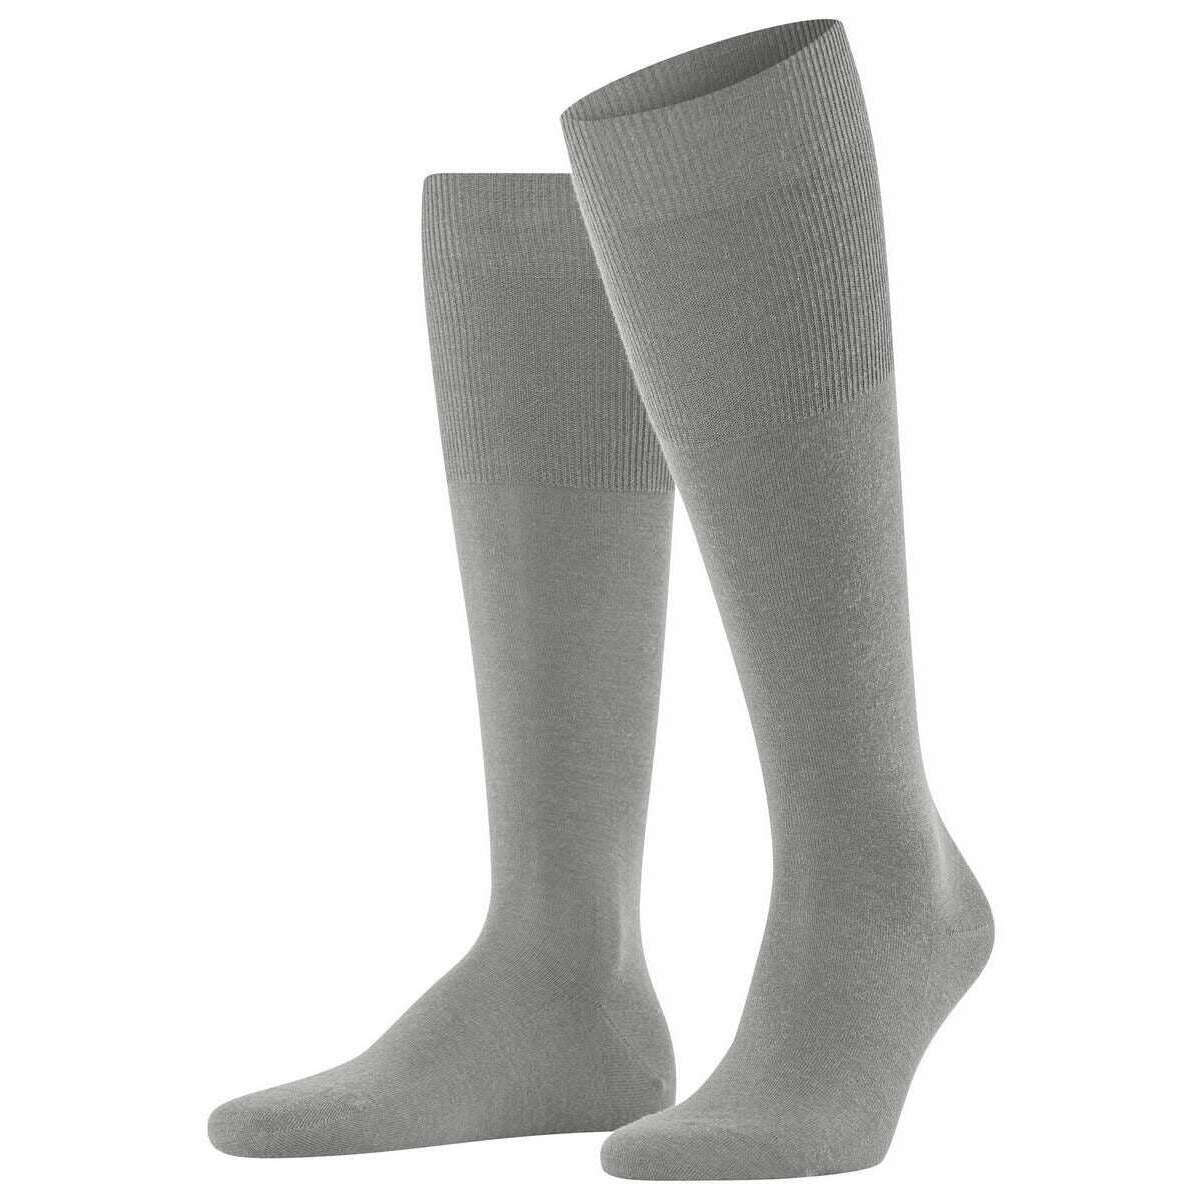 Falke Airport Knee High Socks - Lunar Grey